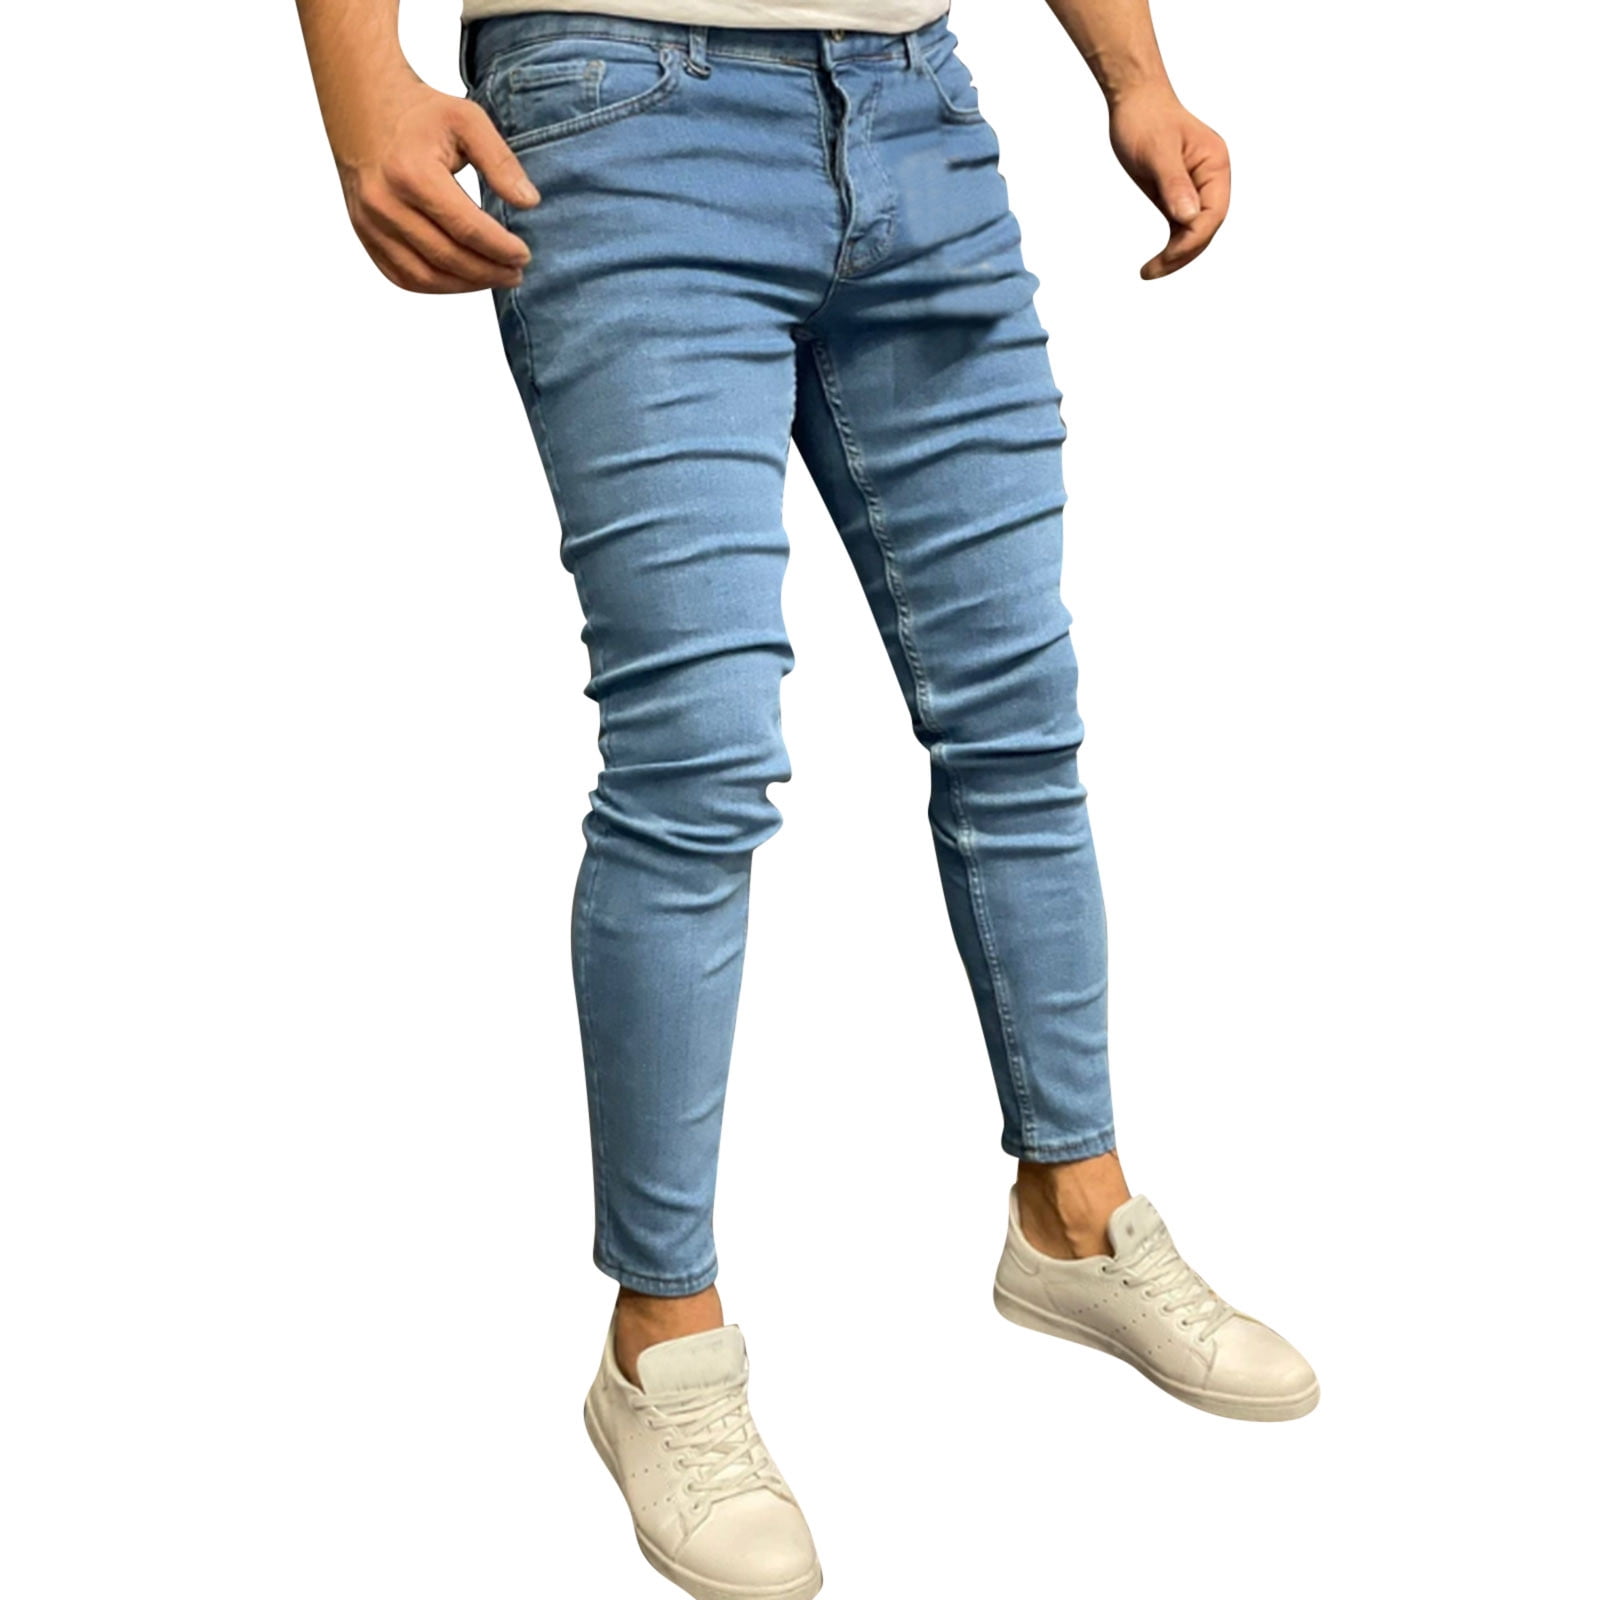 Buy Blue Jeans & Jeggings for Women by MEGHZ Online | Ajio.com